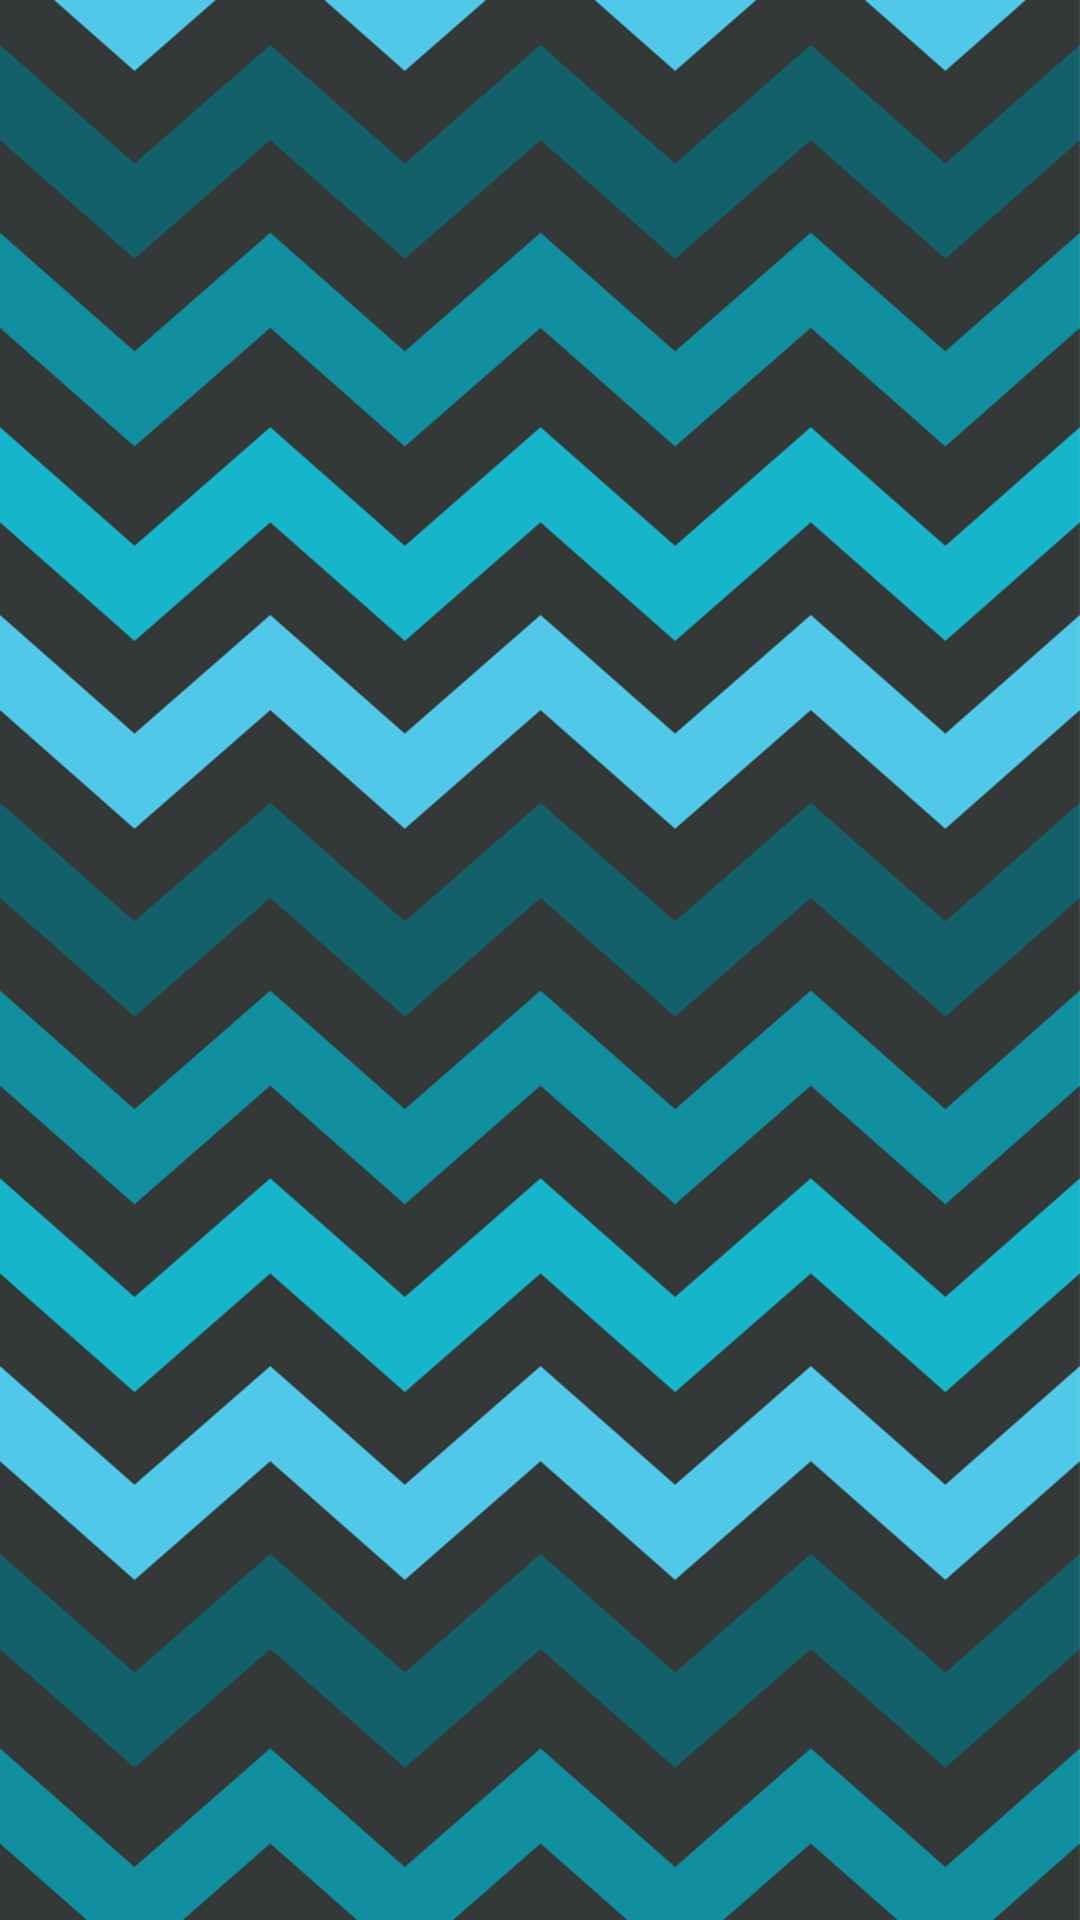 1080x1920 Chevron Dim Blue and Black iPhone 6 Plus Wallpaper - Zigzag .